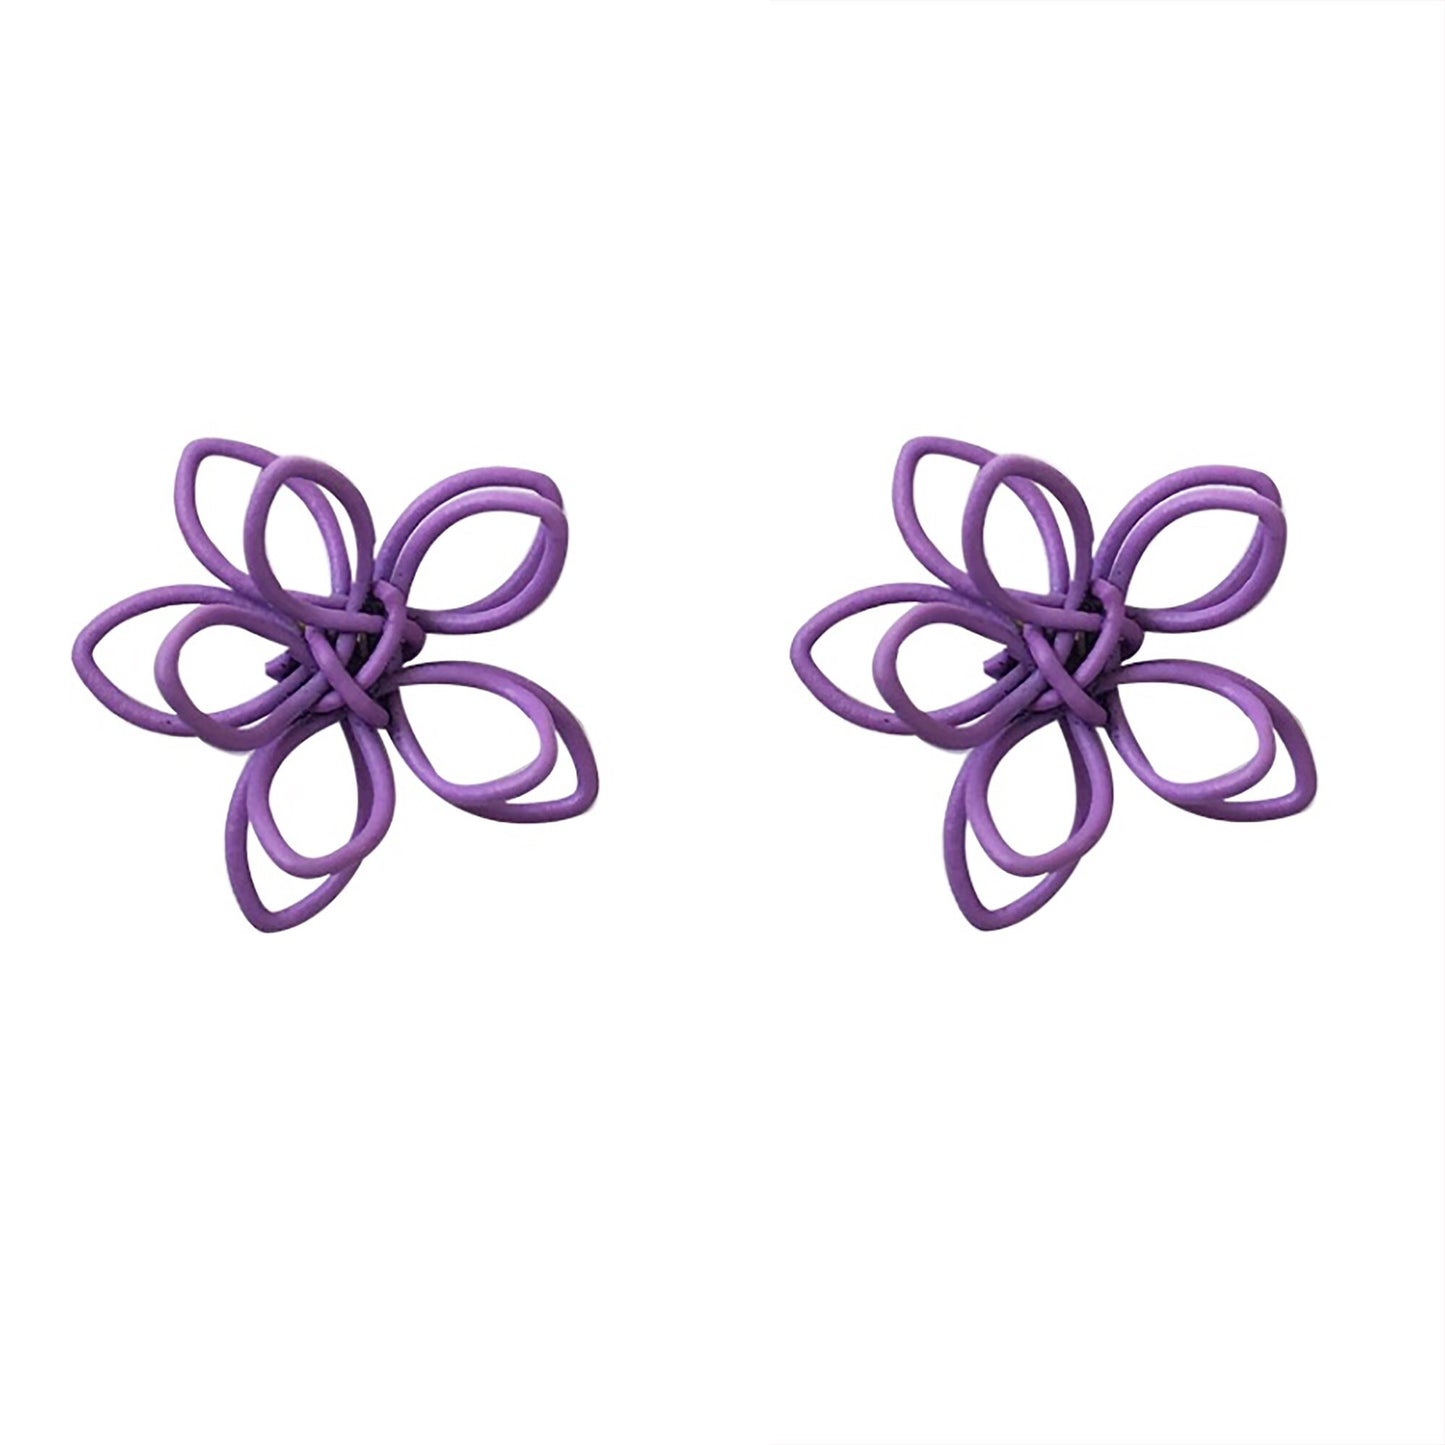 3D Wired Purple Daisy Flower Studs Earrings Sterling Silver Ear Posts Knitted Knots